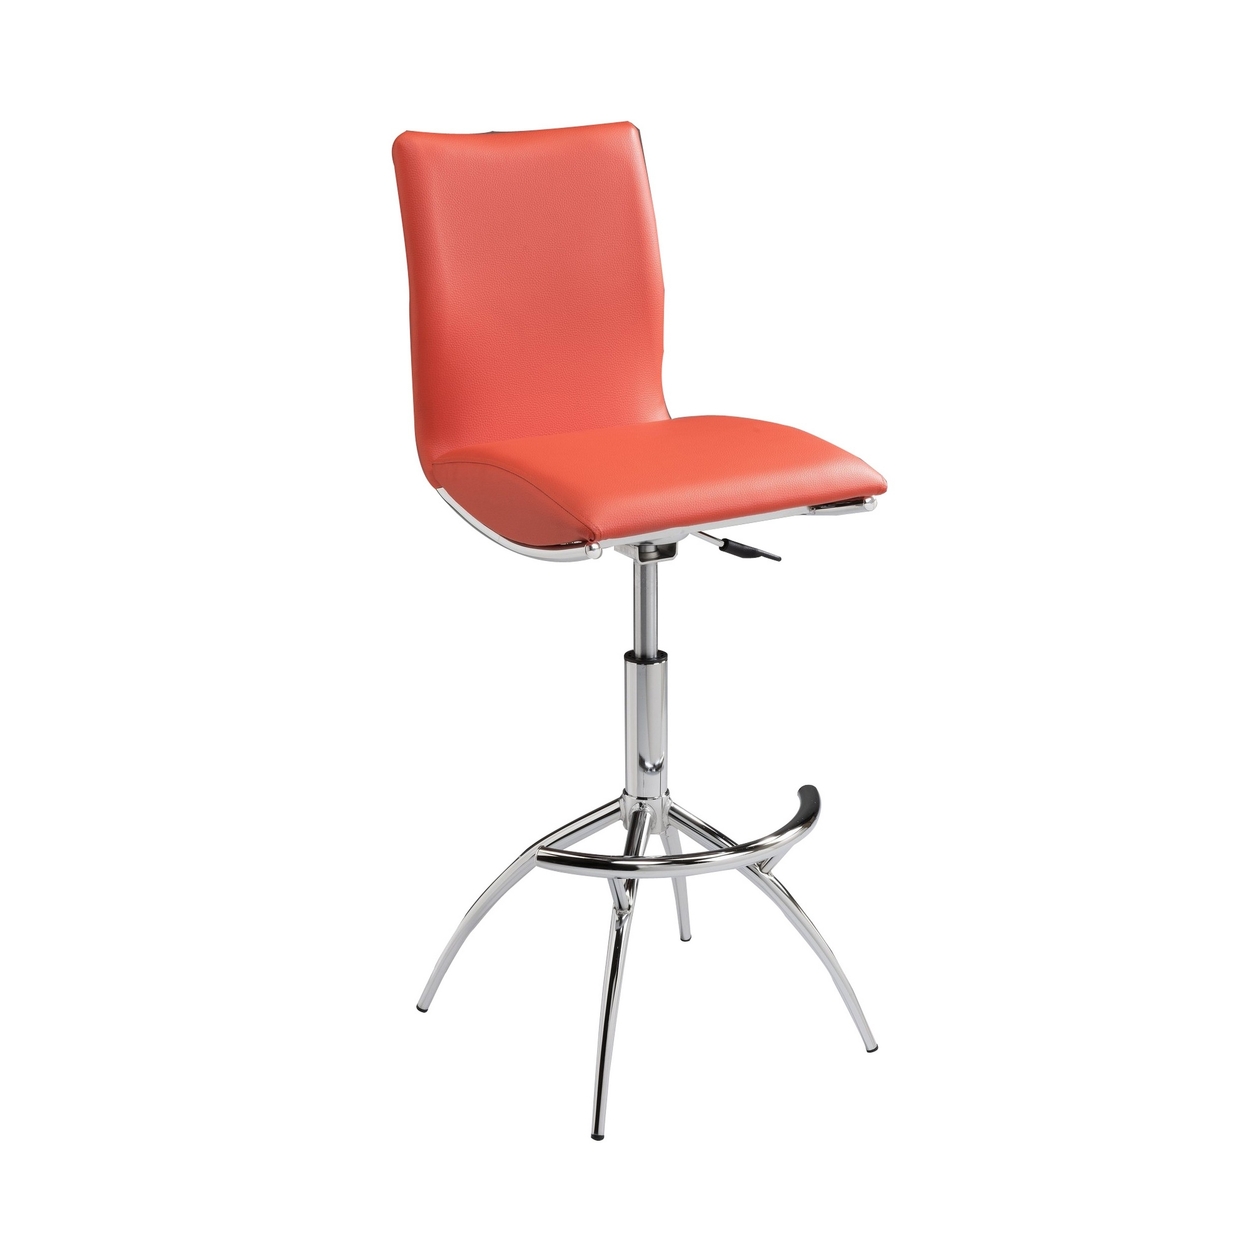 Deko 26-31 Inch Adjustable Height Barstool Chair, Set Of 2, Orange Faux Leather - Saltoro Sherpi